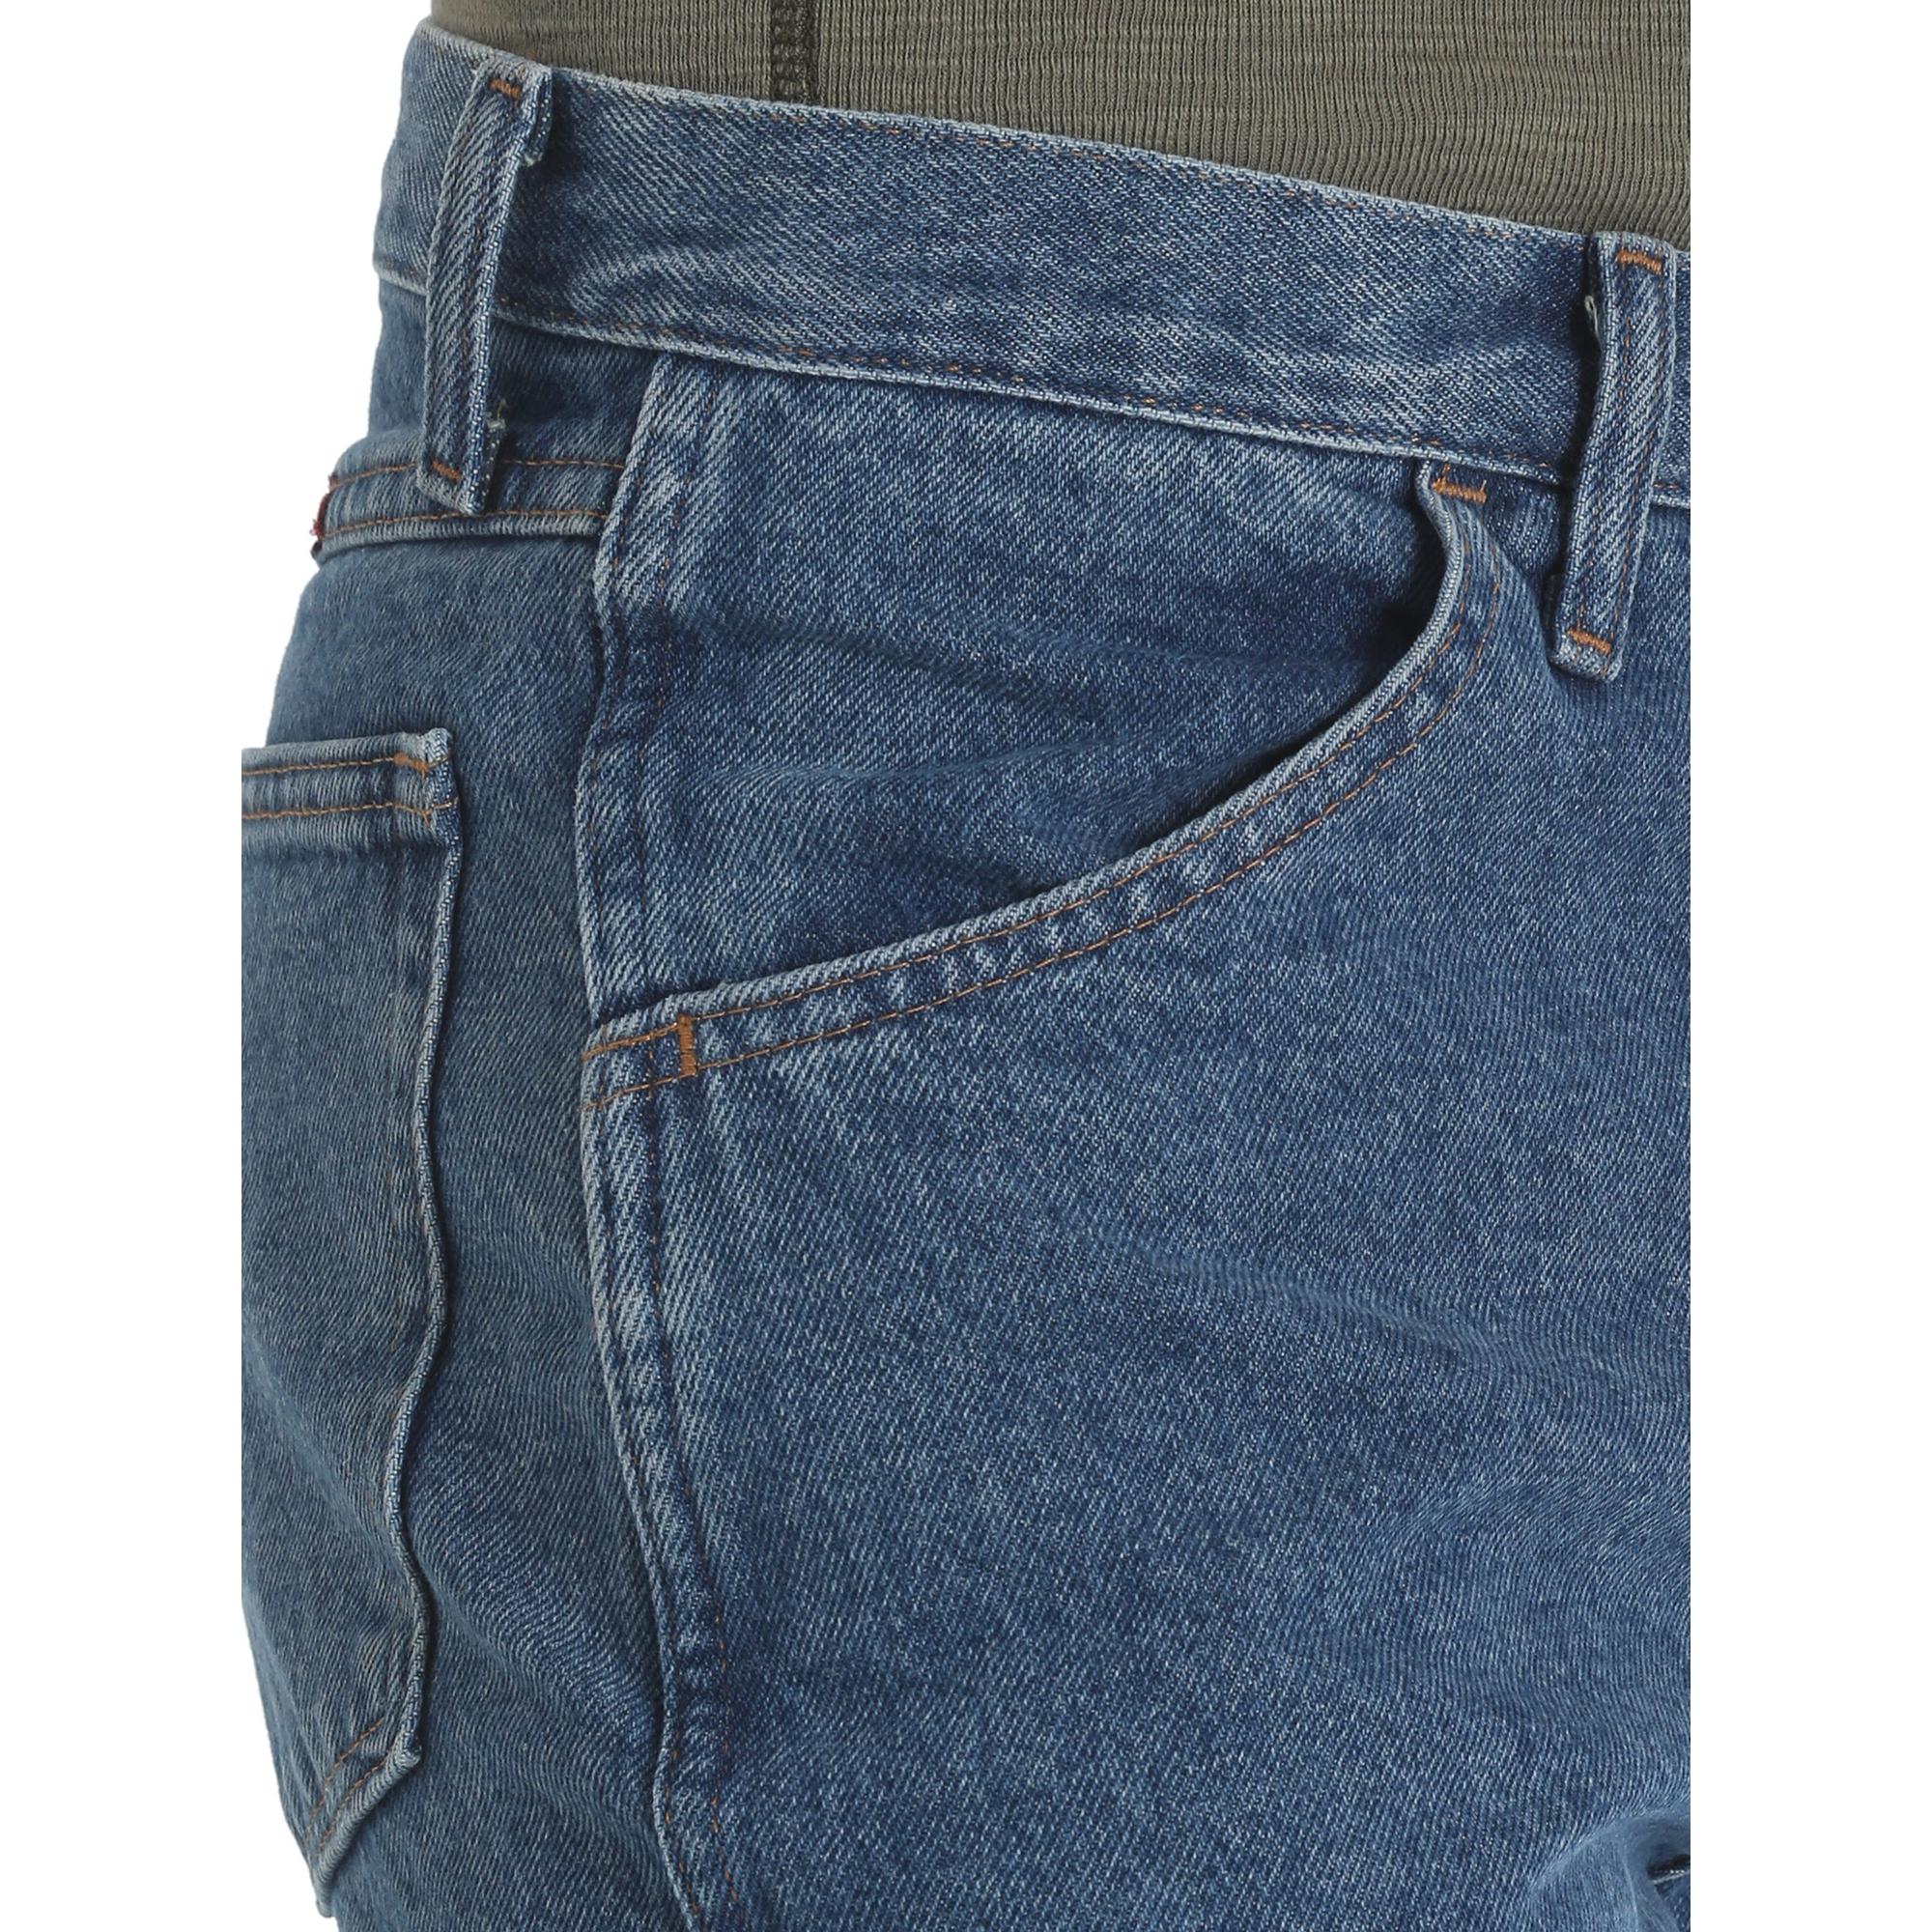 Wrangler Rustler Men's and Big Men's Regular Fit Jeans - image 3 of 7